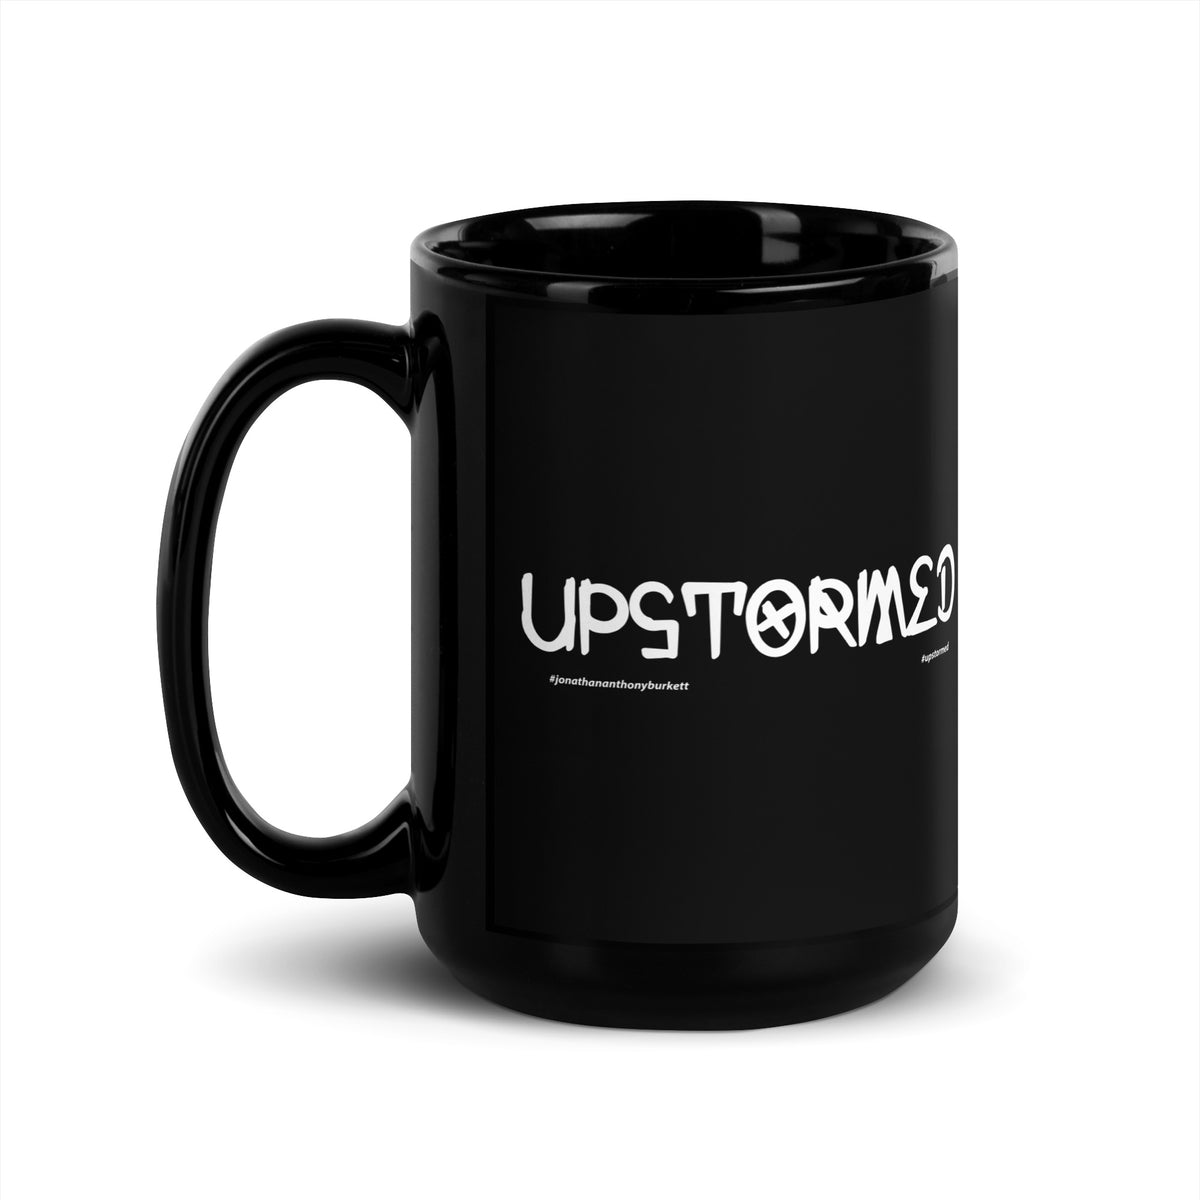 Upstormed Mug